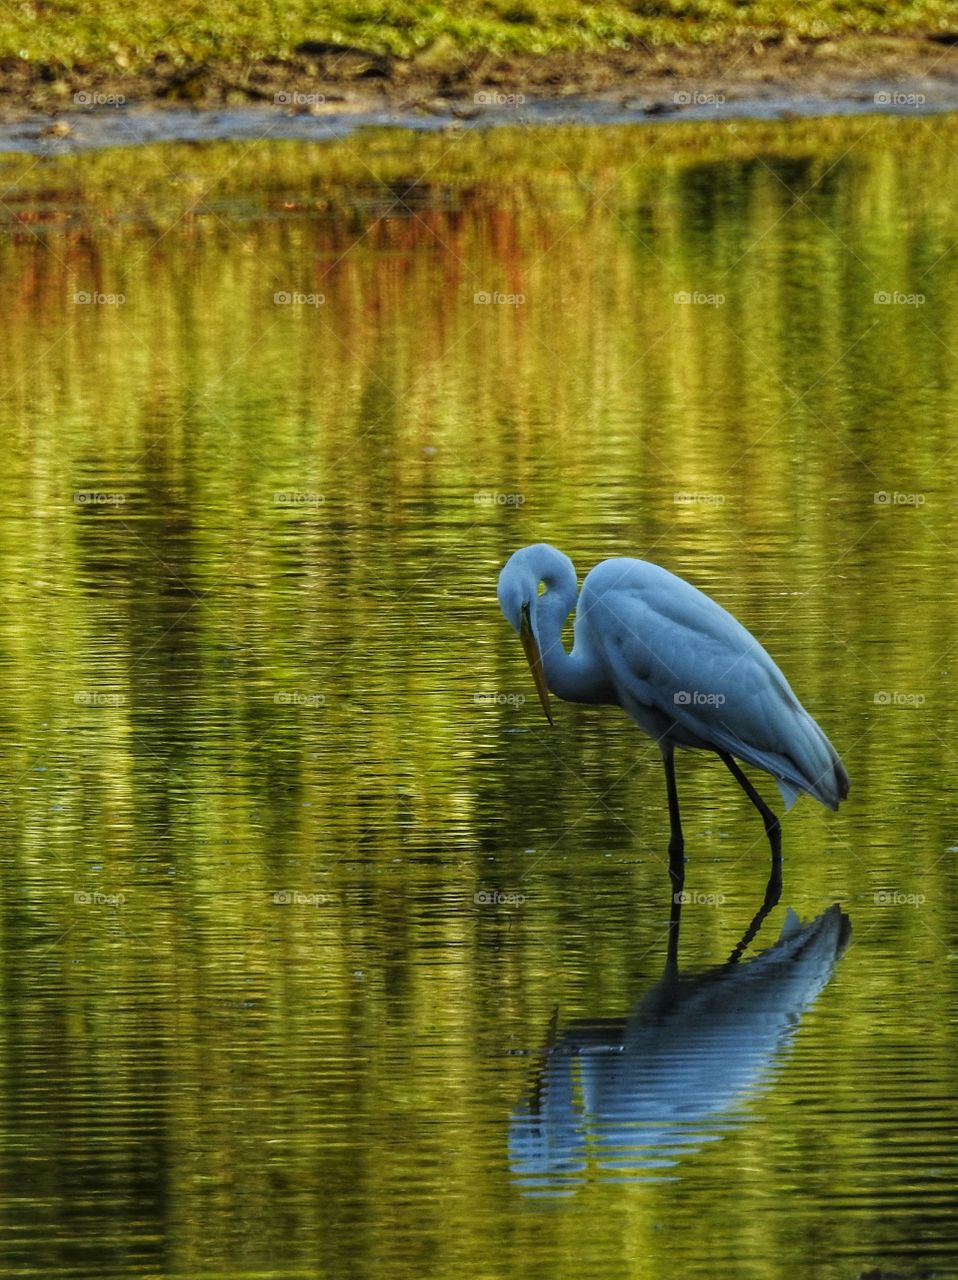 Water, Lake, Bird, Nature, Reflection